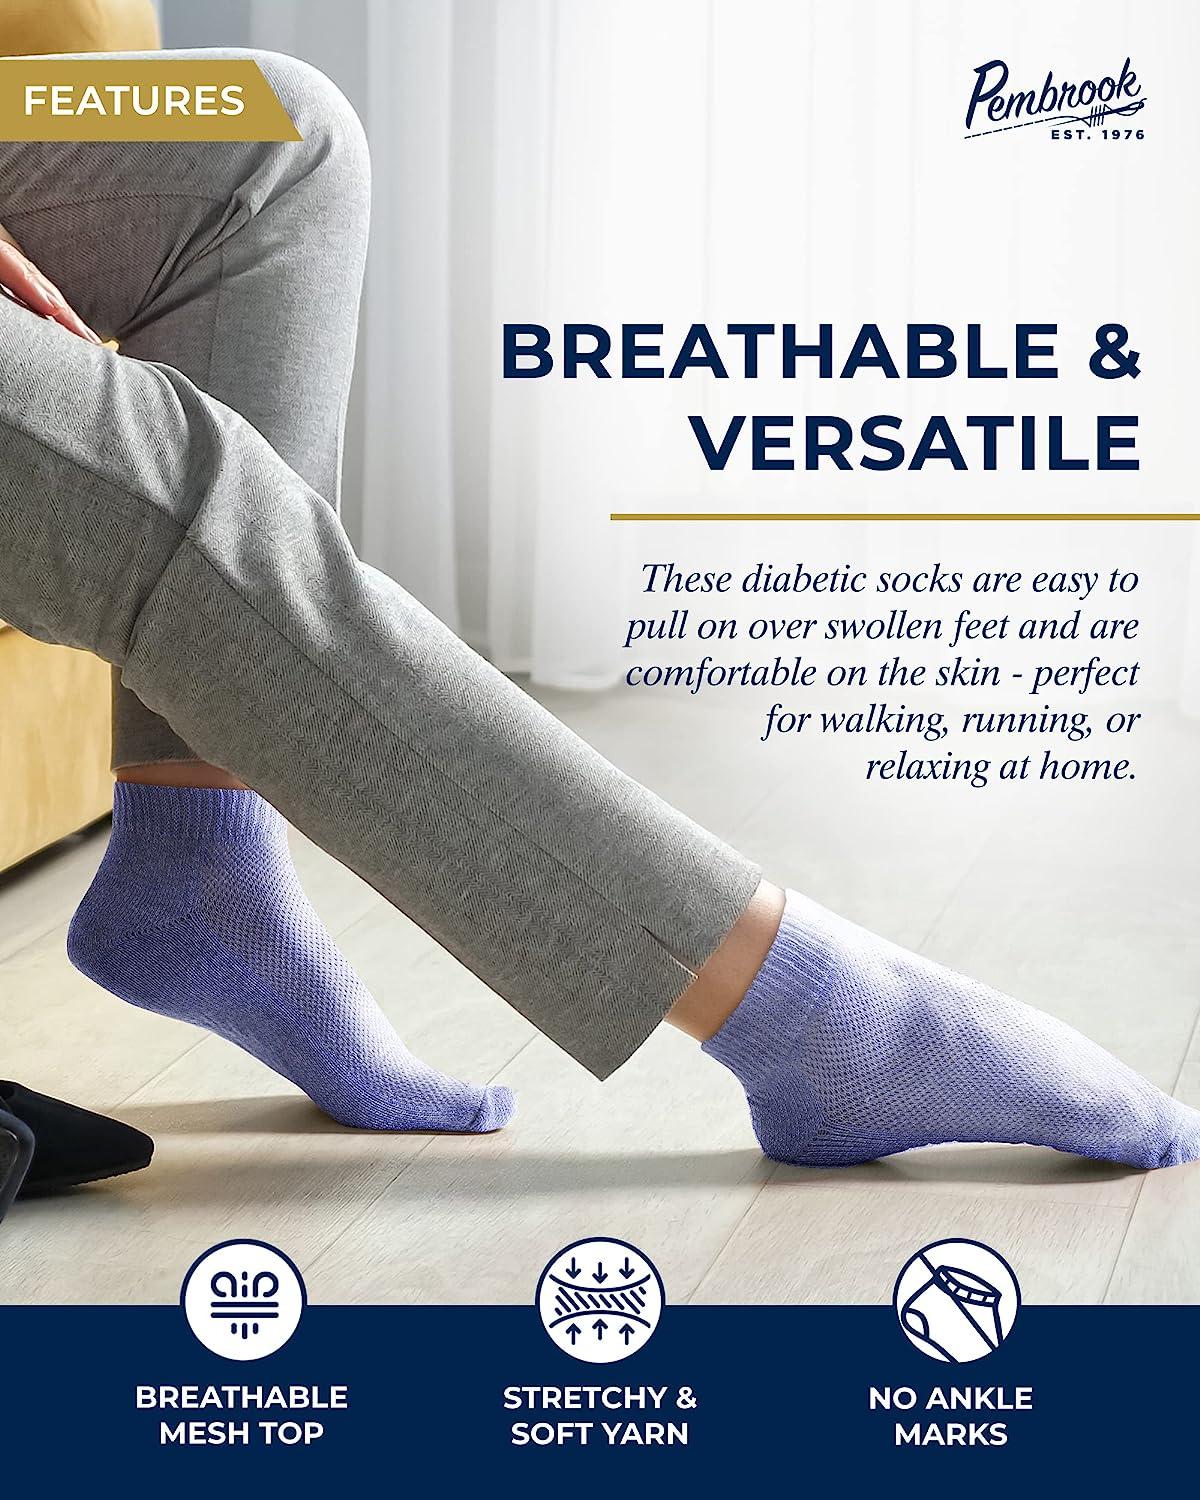 Pembrook Diabetic Socks for Women and Men - 6 Pairs Ankle Low Cut